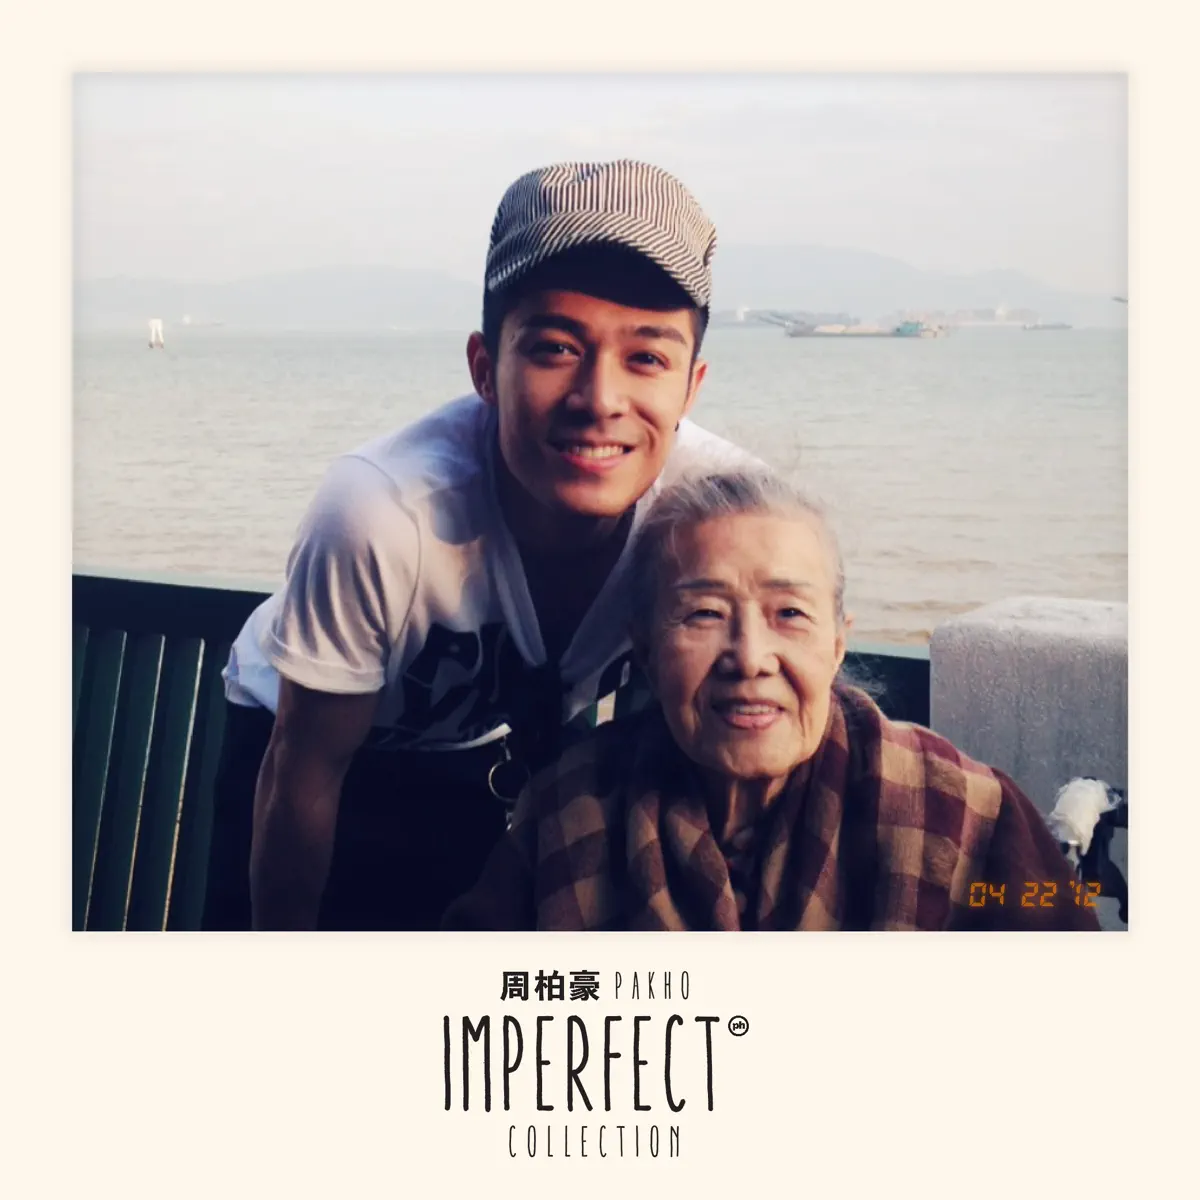 周柏豪 - Imperfect Collection (2012) [iTunes Plus AAC M4A]-新房子